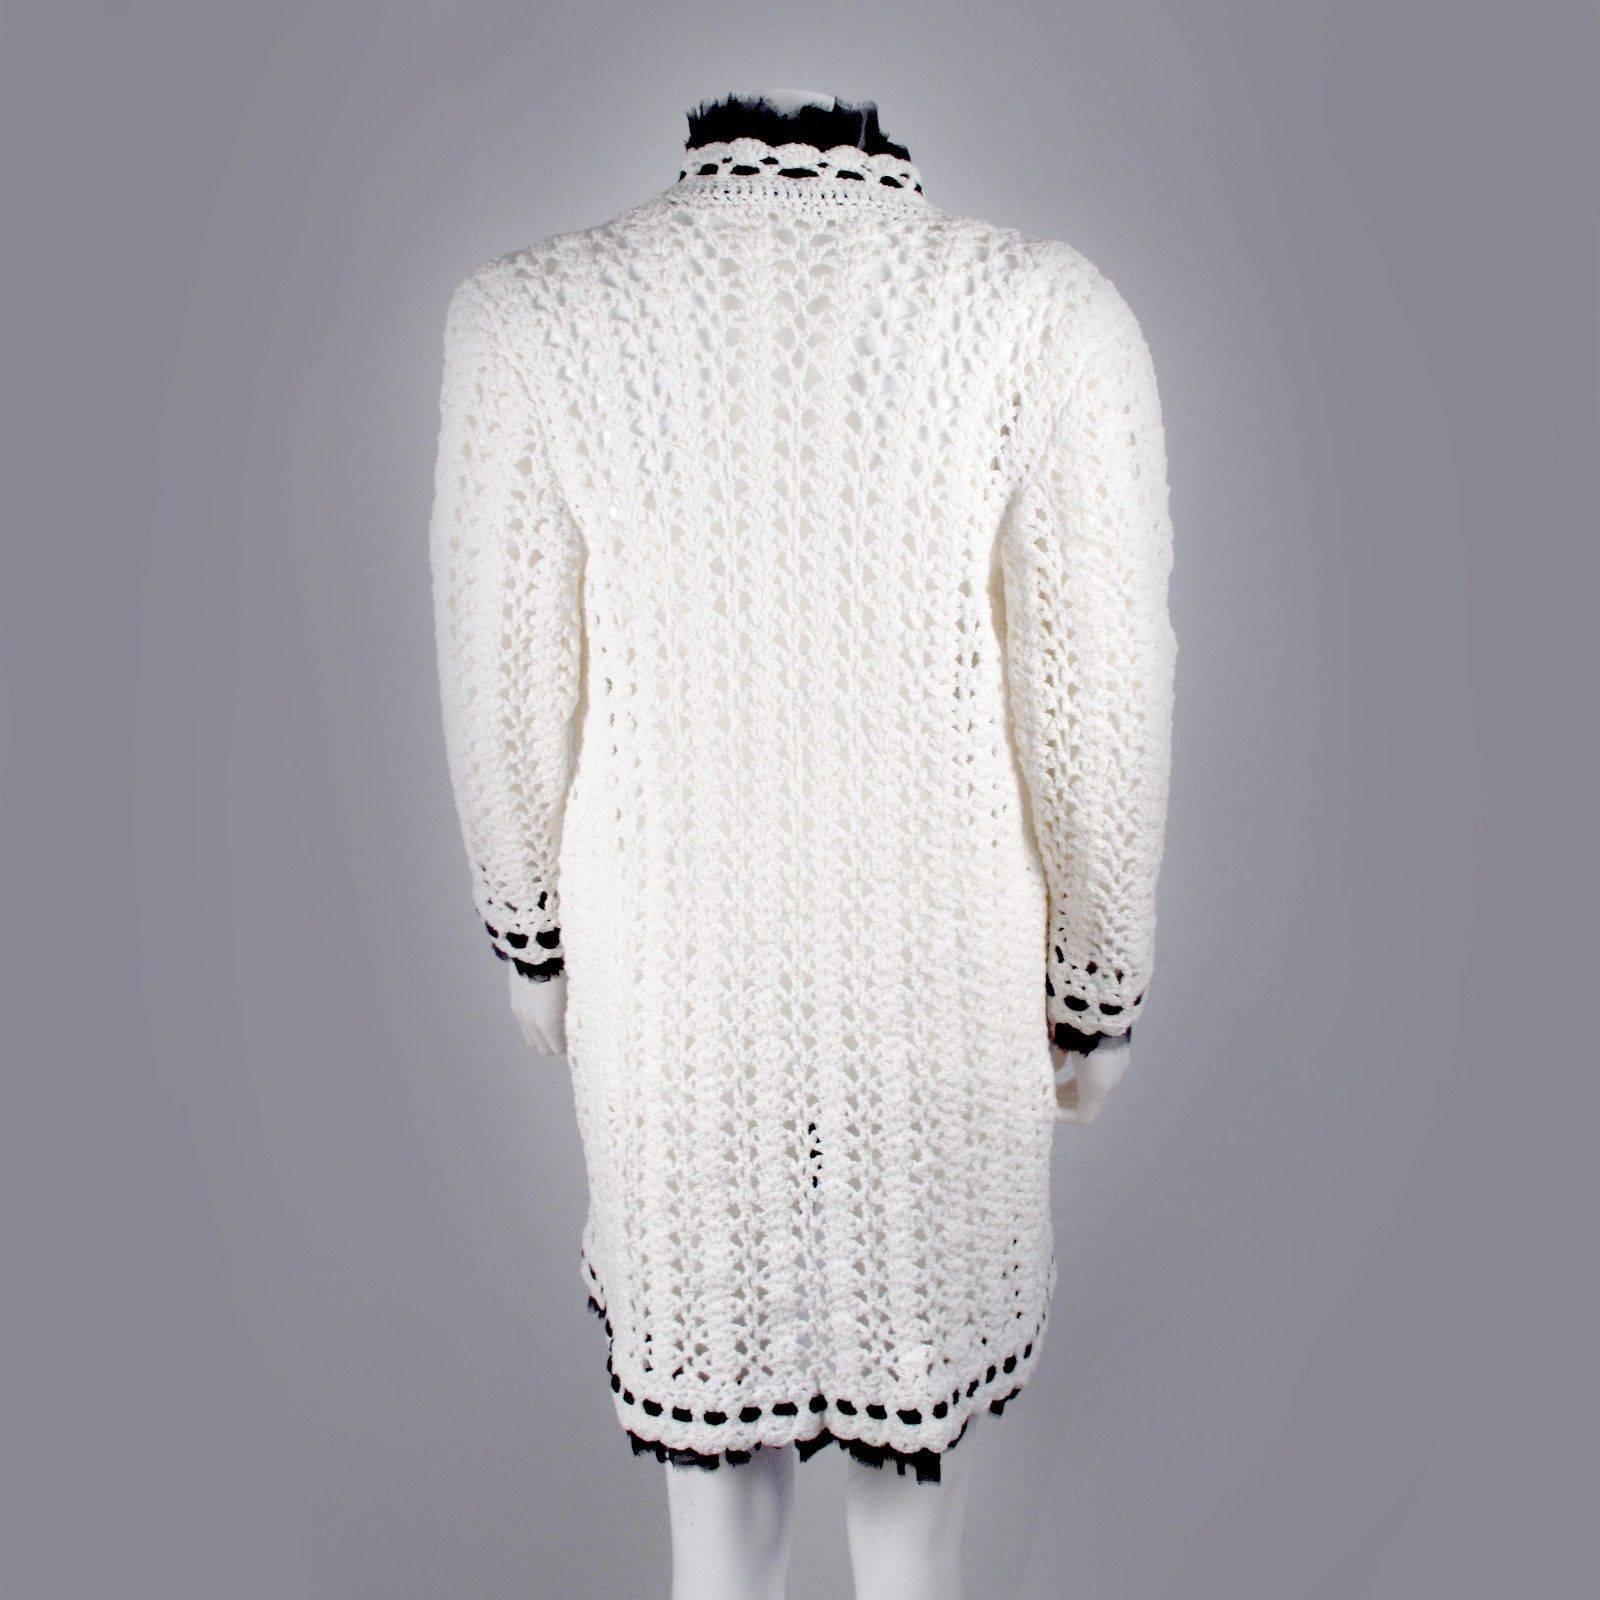 Chanel - Long Cardigan Spring Jacket

Size:  US 8 - 40

Color:  White (off-white) / Black

Material: 81% Nylon - 18% Cotton - 1% Spandex

------------------------------------------------------------

Details:

- black silk trim

- open